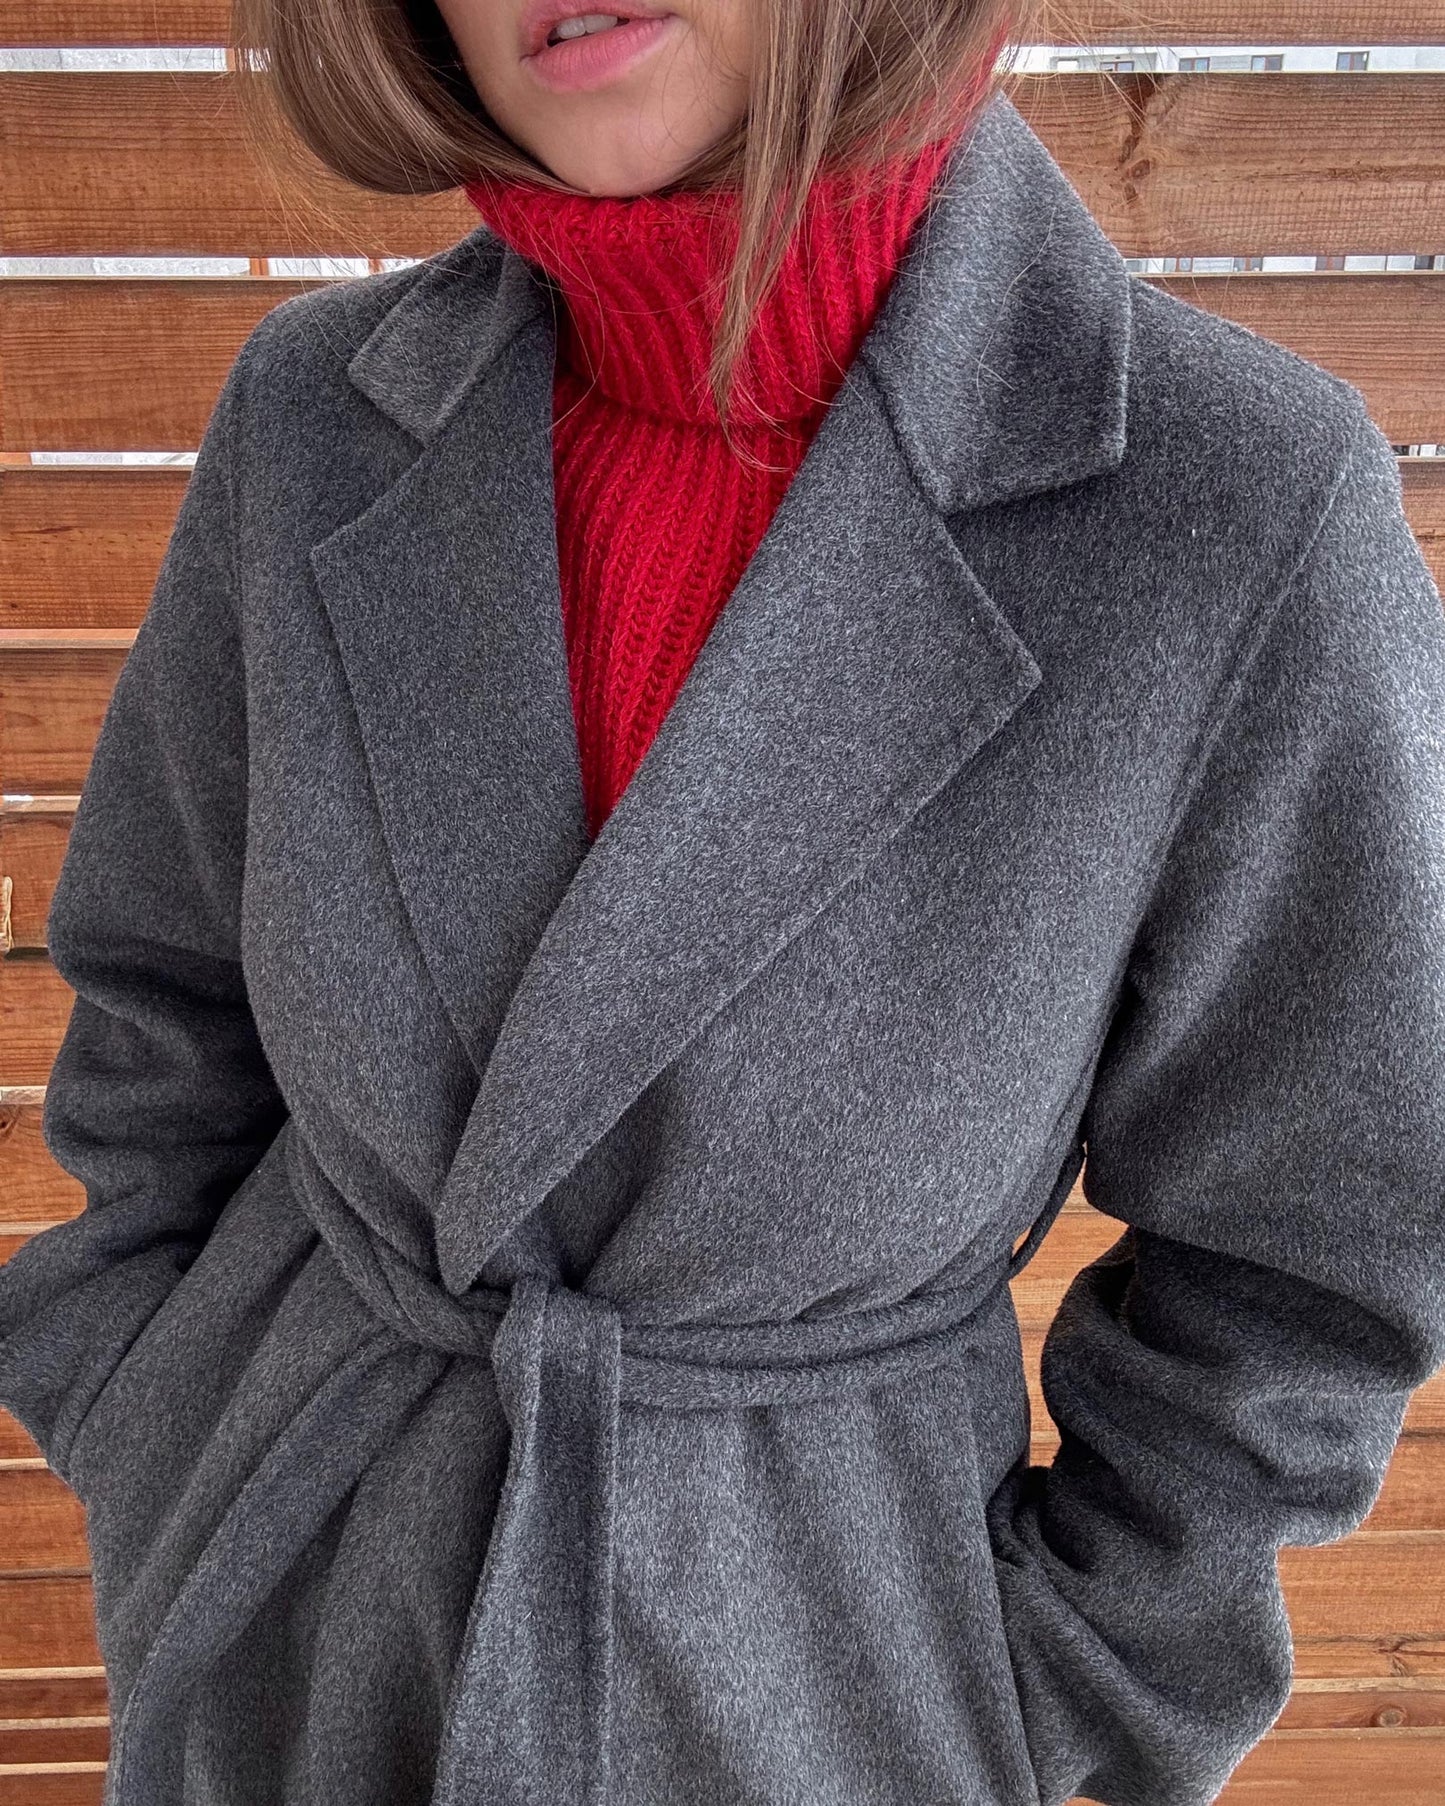 Feminine knitwear design, Bobbi Neck Warmer, for stylish neck protection.